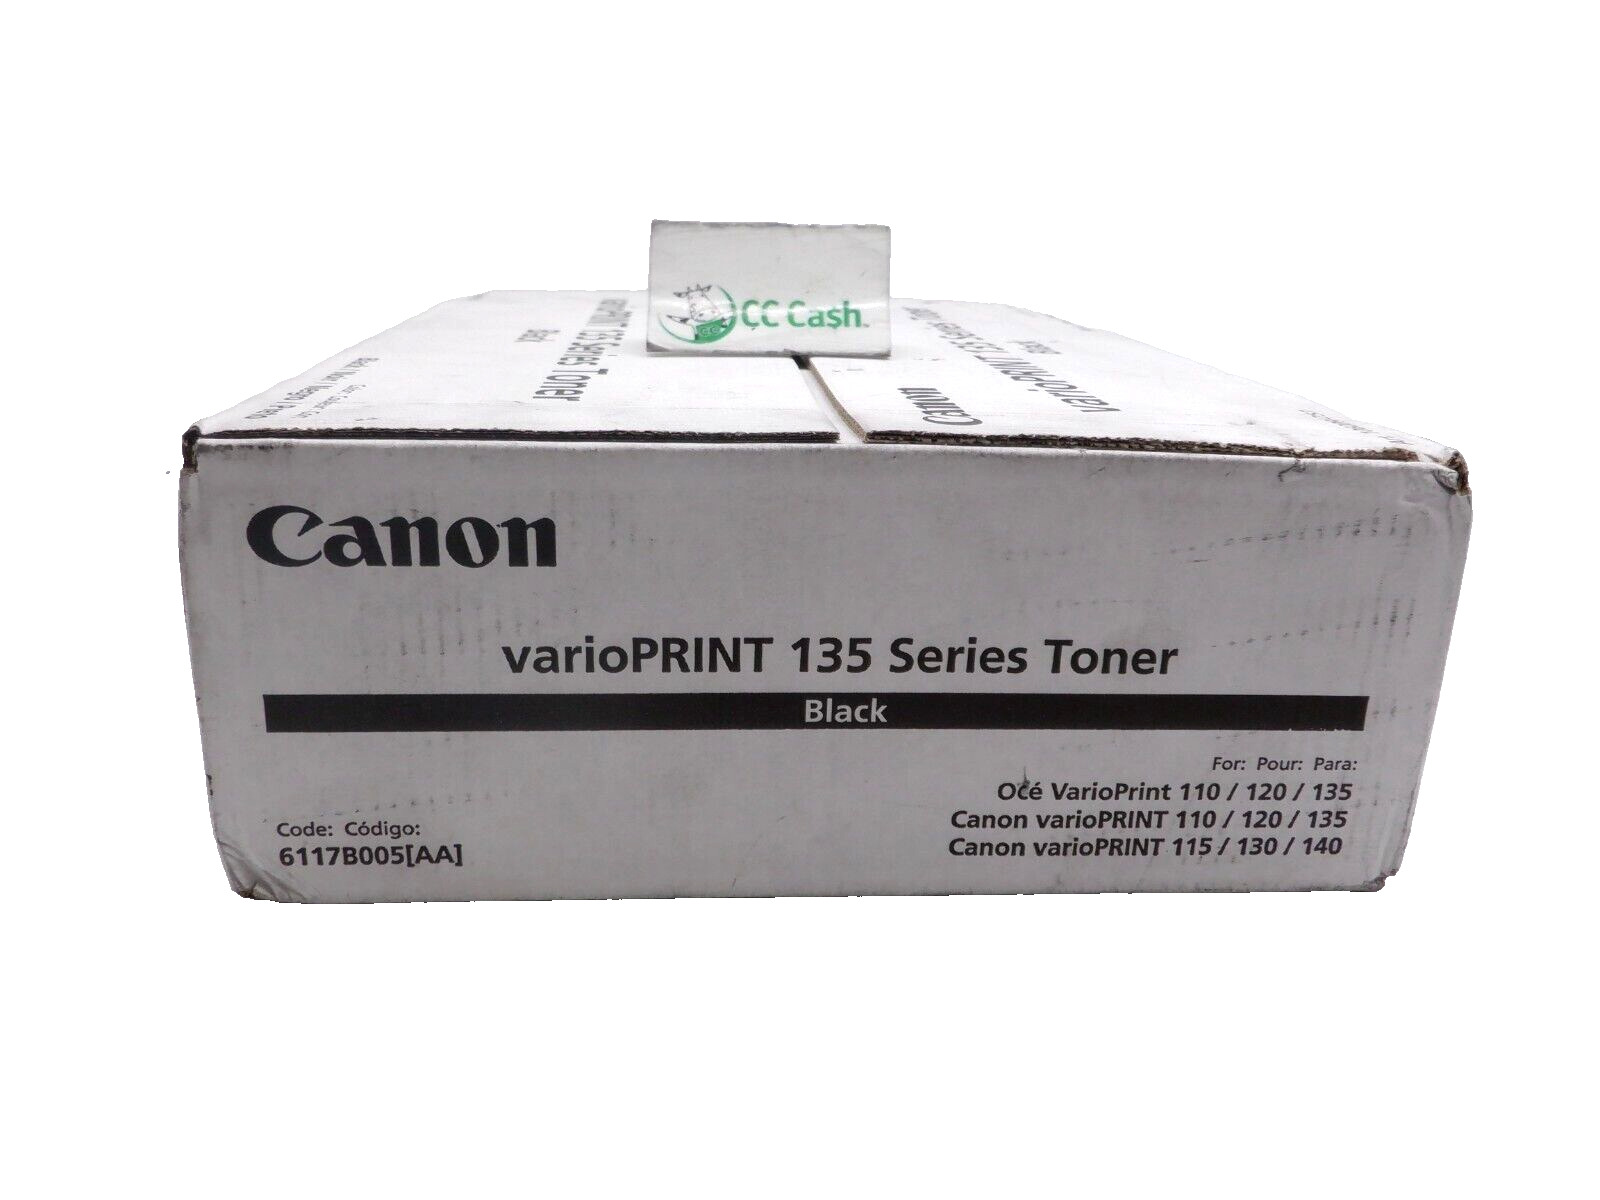 Genuine Canon varioPRINT 135 Series Toner Black 6117B005[AA] 